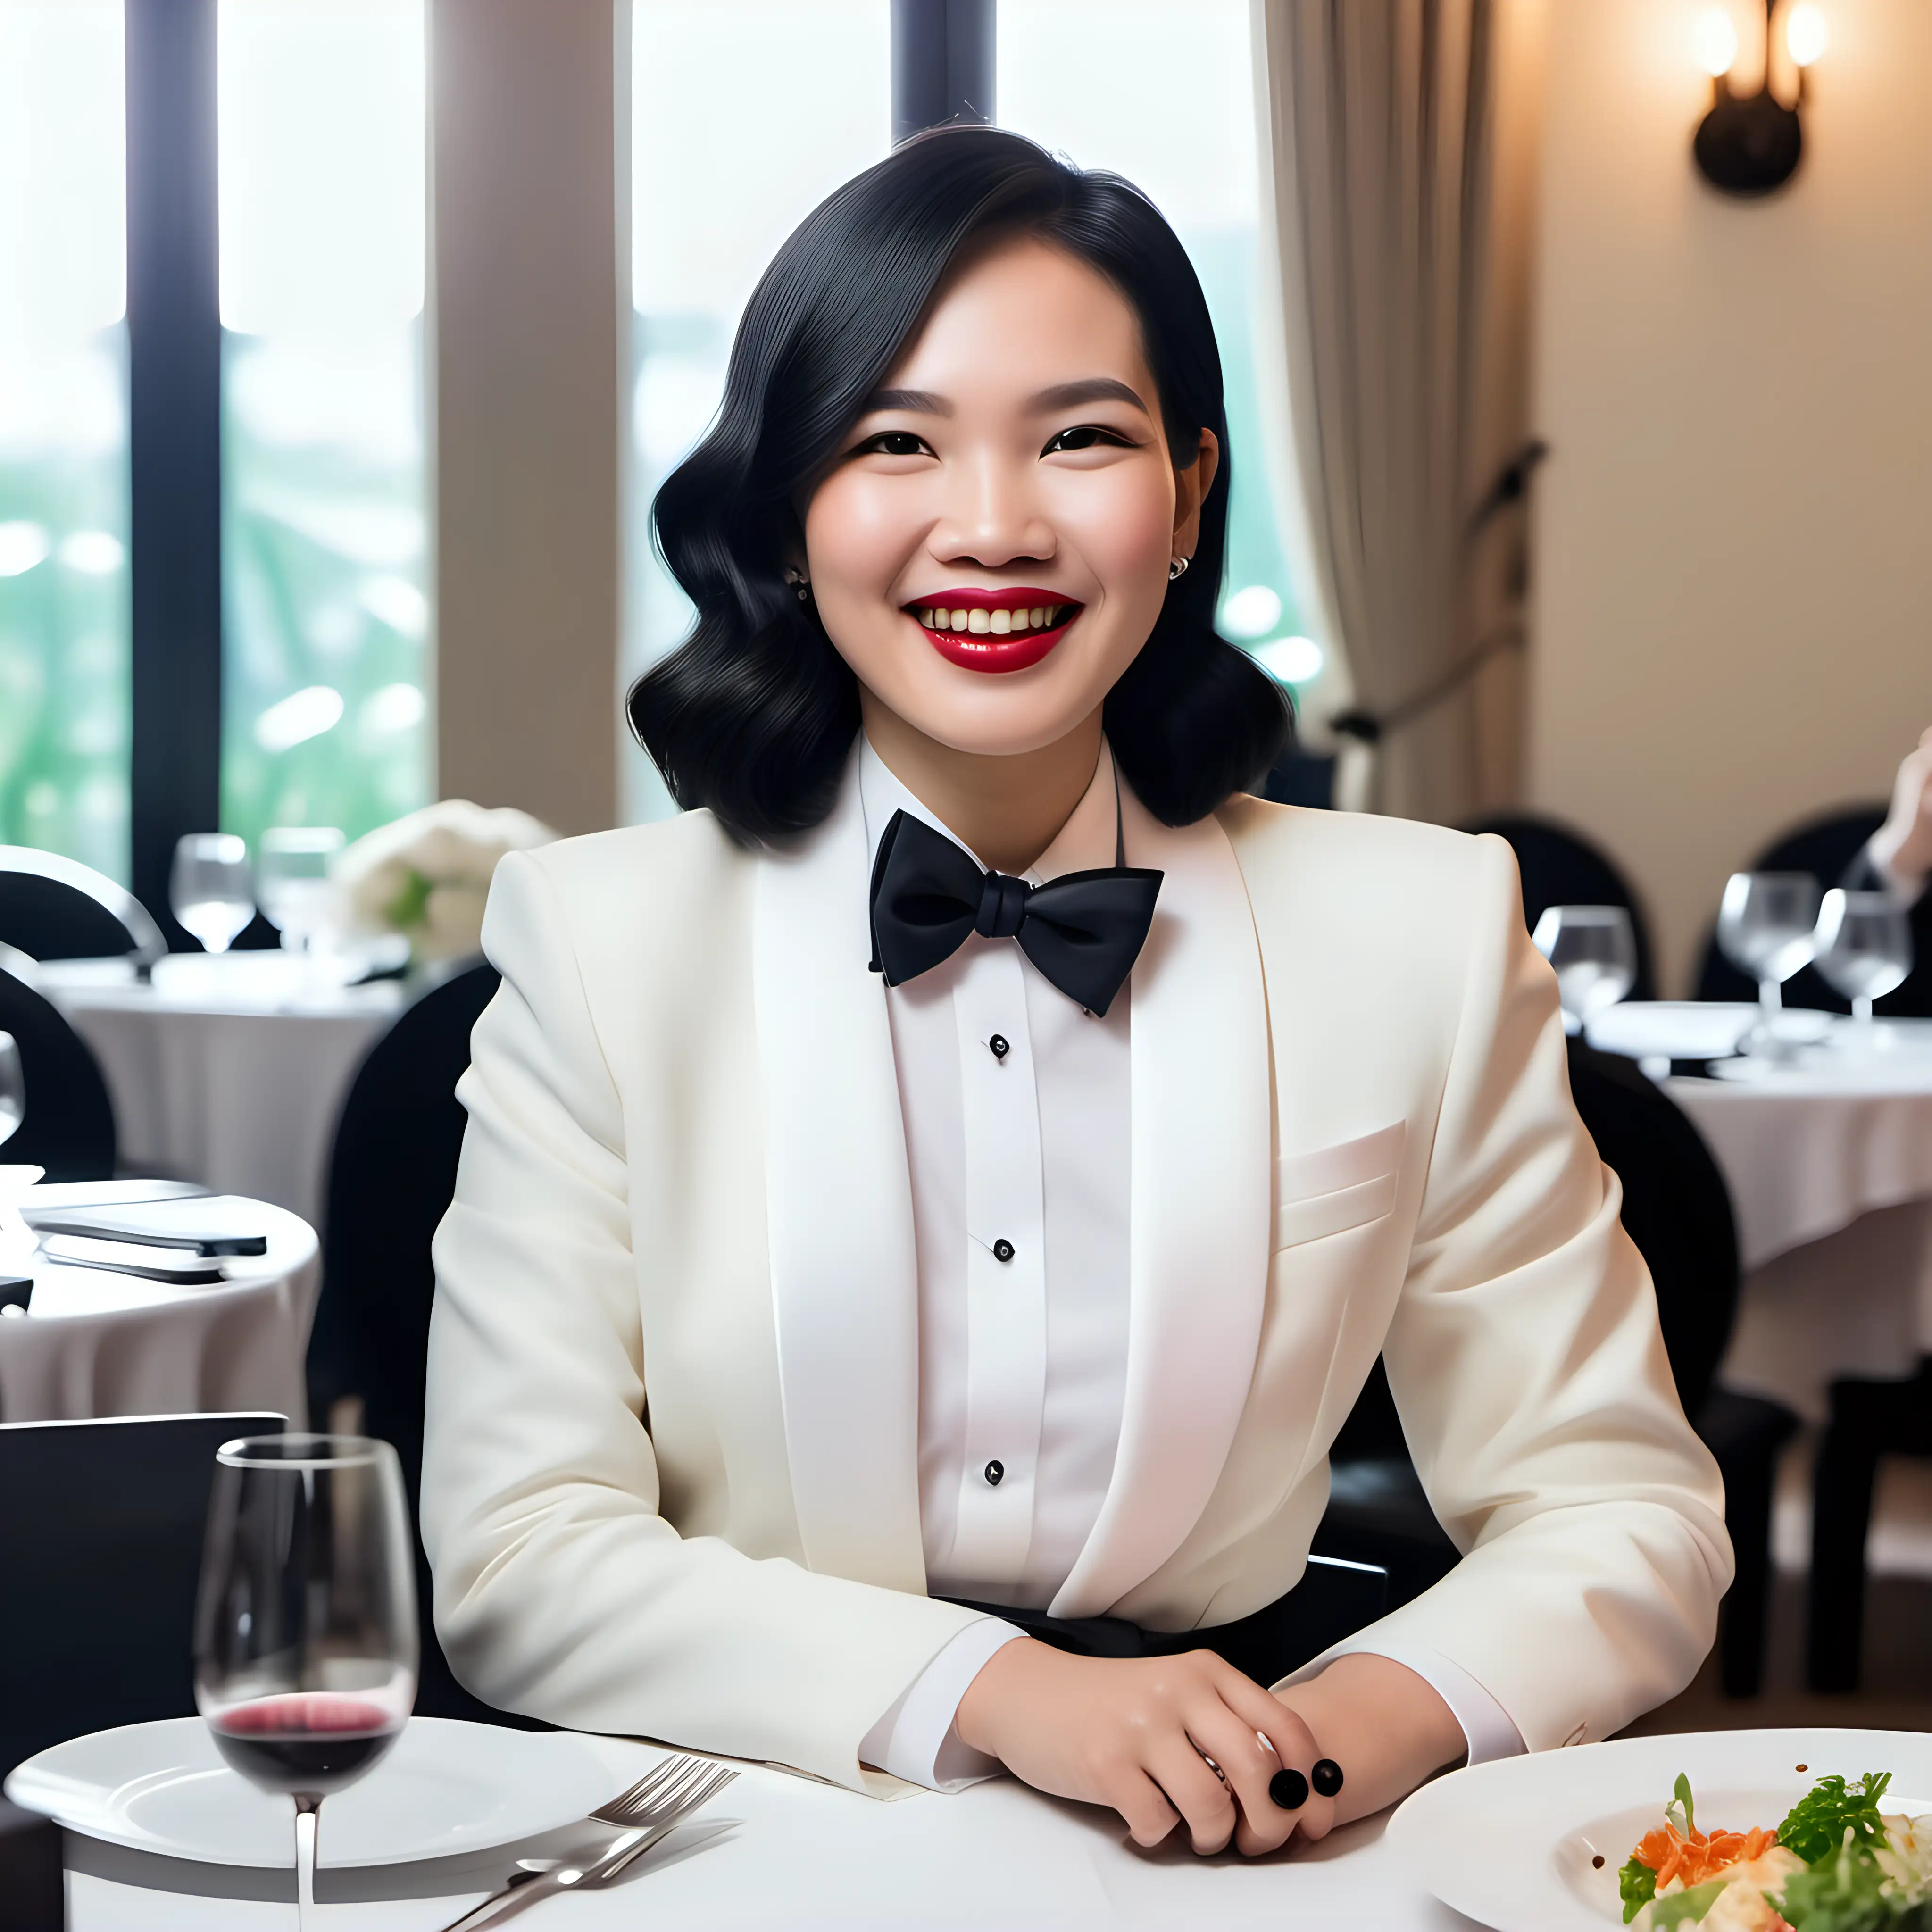 Smiling-Vietnamese-Woman-in-Tuxedo-Jacket-at-Elegant-Dinner-Table